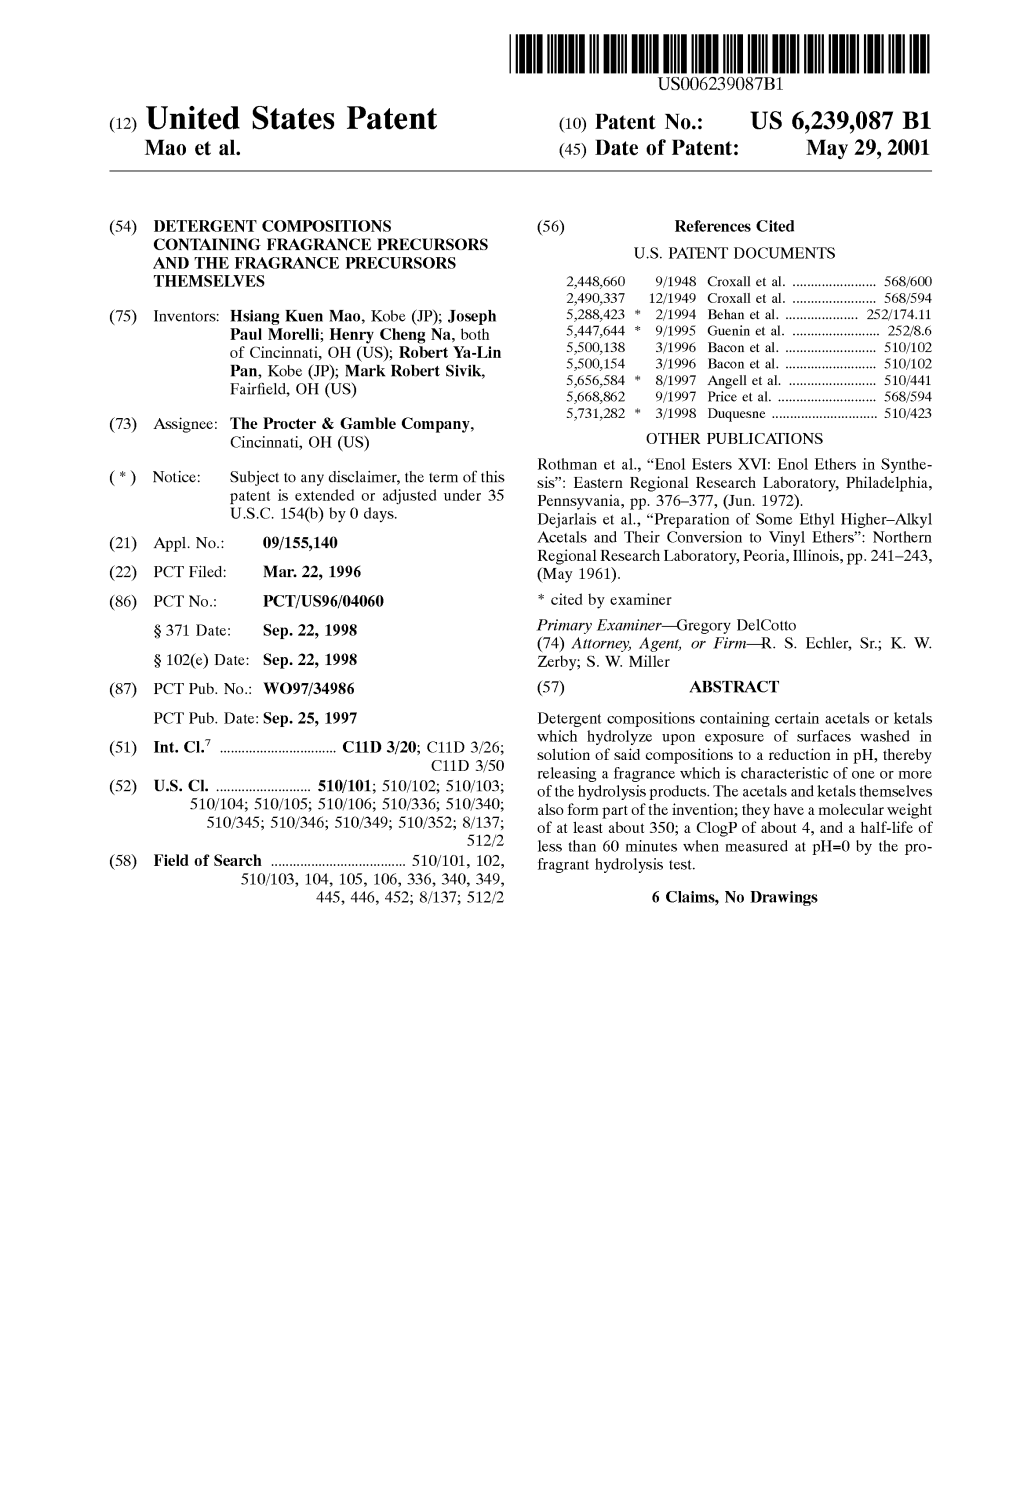 (12) United States Patent (10) Patent No.: US 6,239,087 B1 Mao Et Al